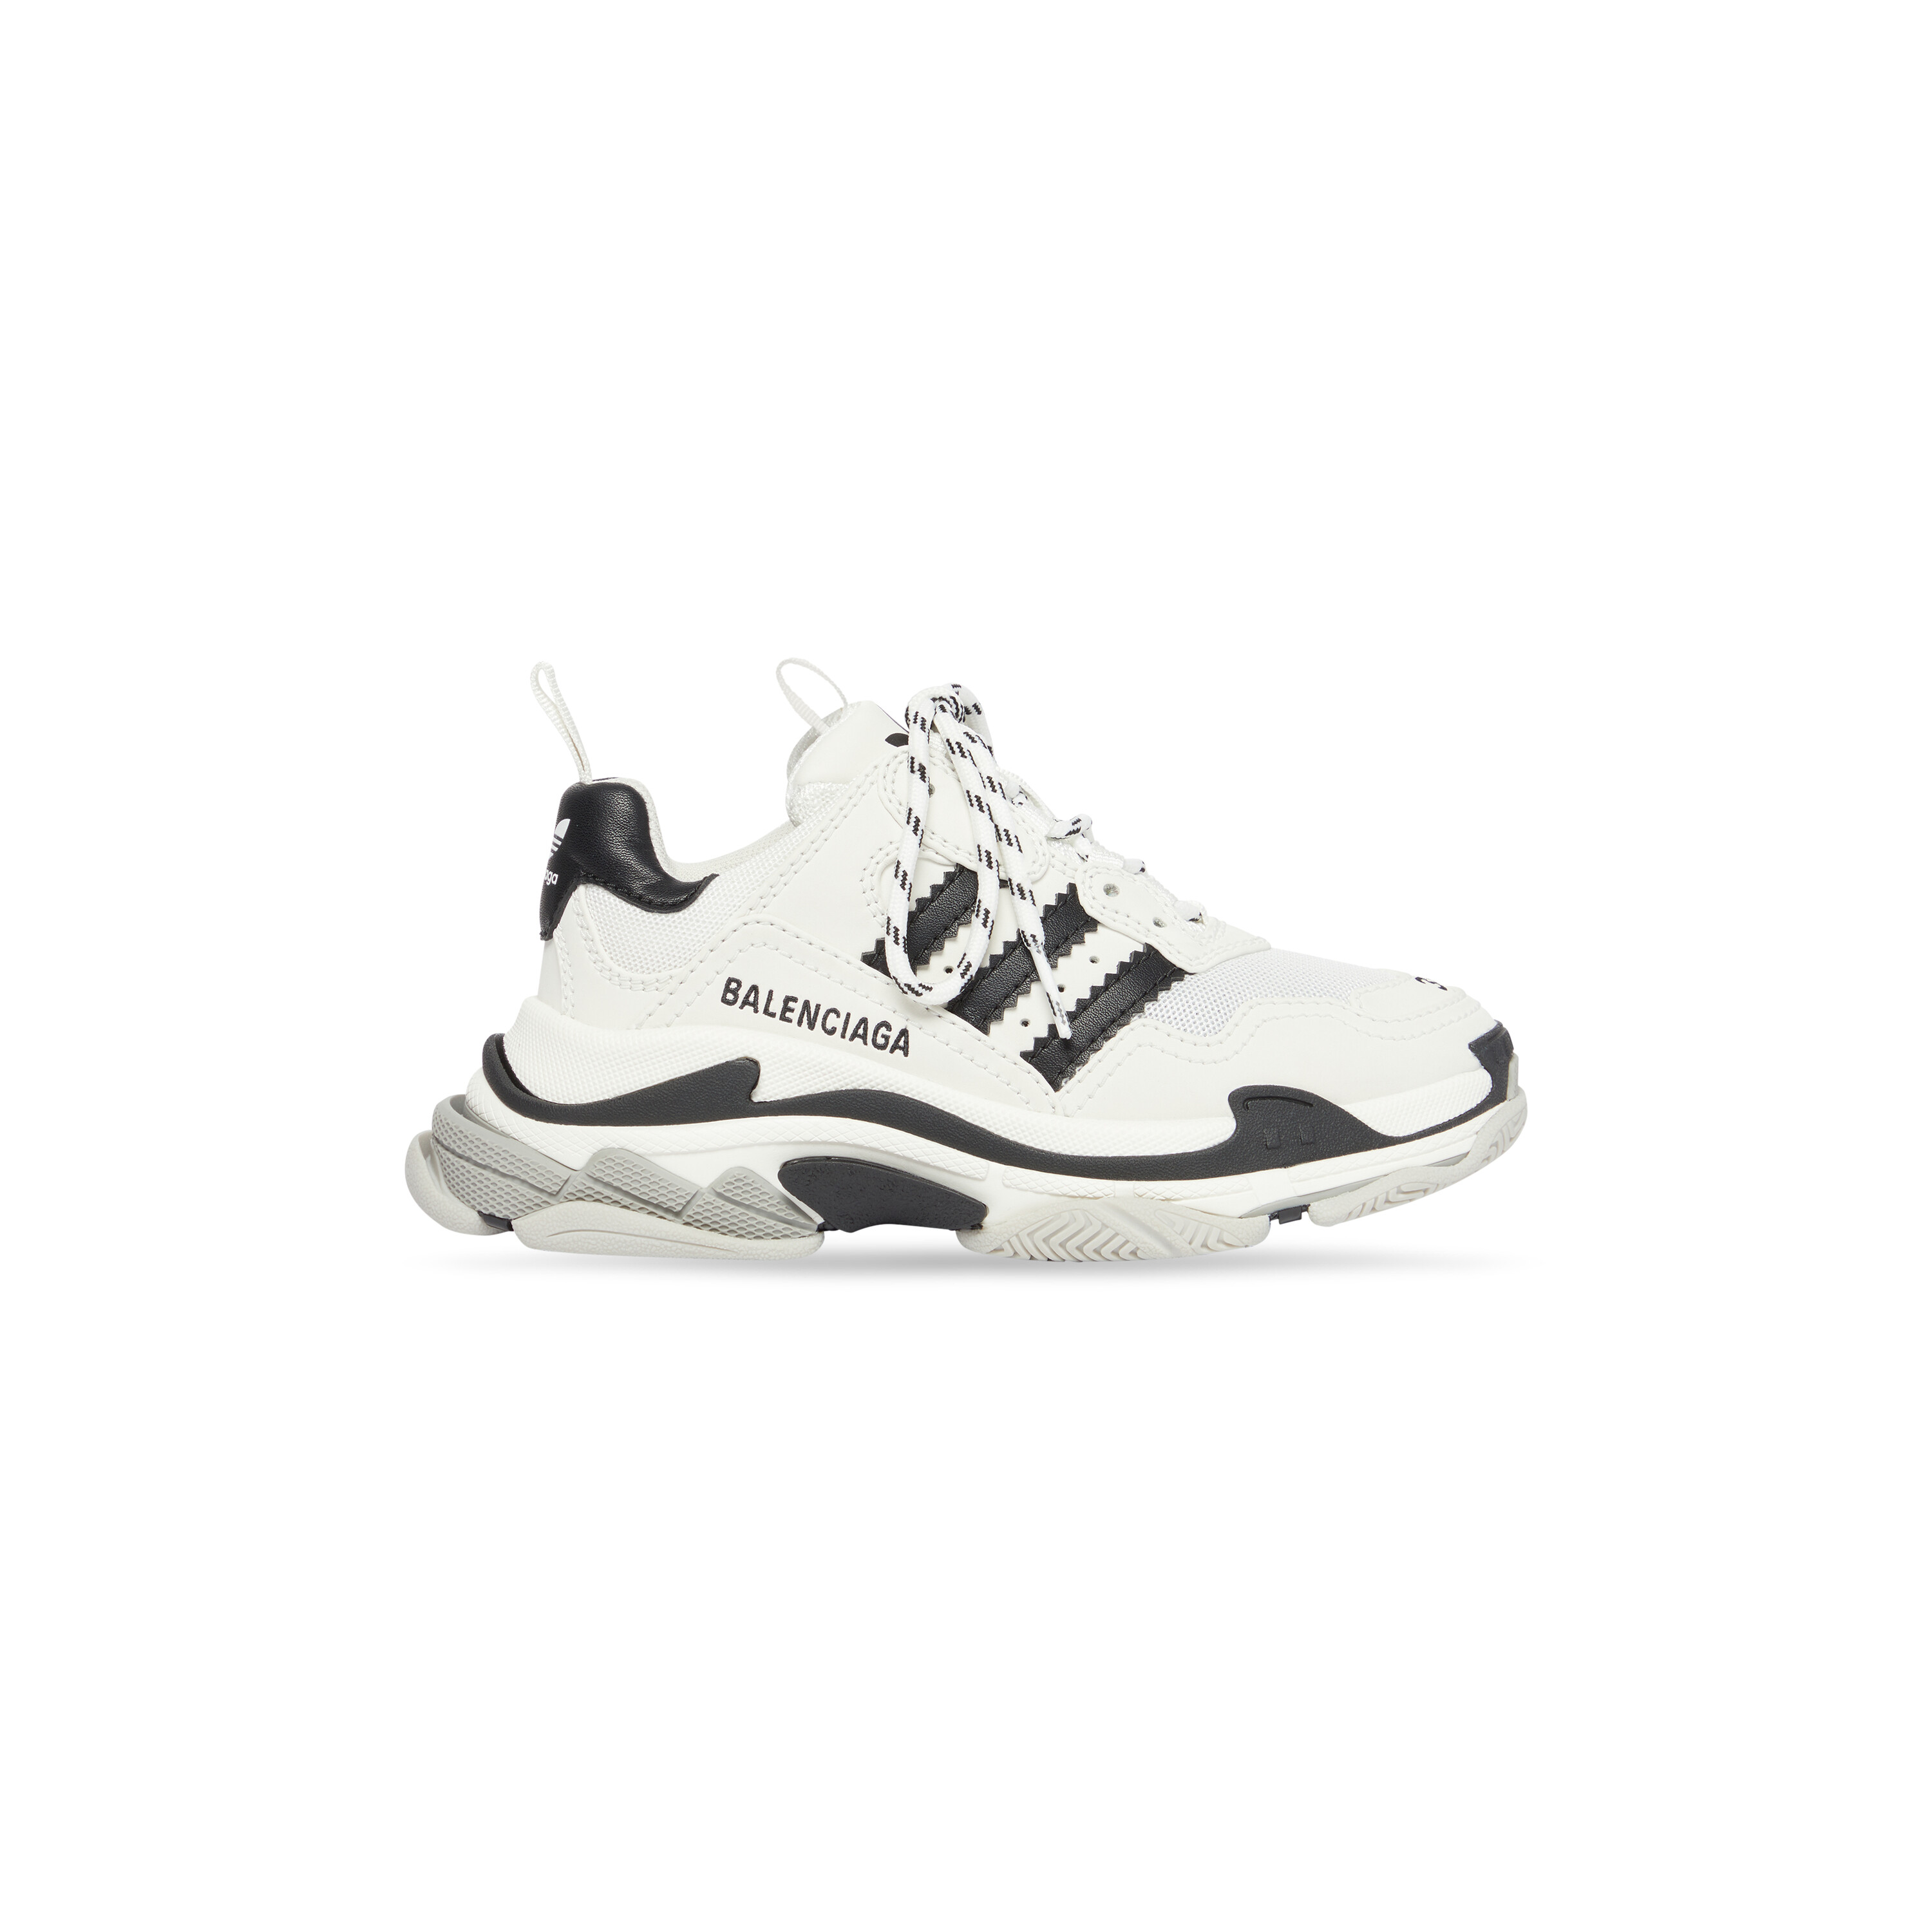 Woods Alaska buket Men's Balenciaga / Adidas Triple S Sneaker in White | Balenciaga US